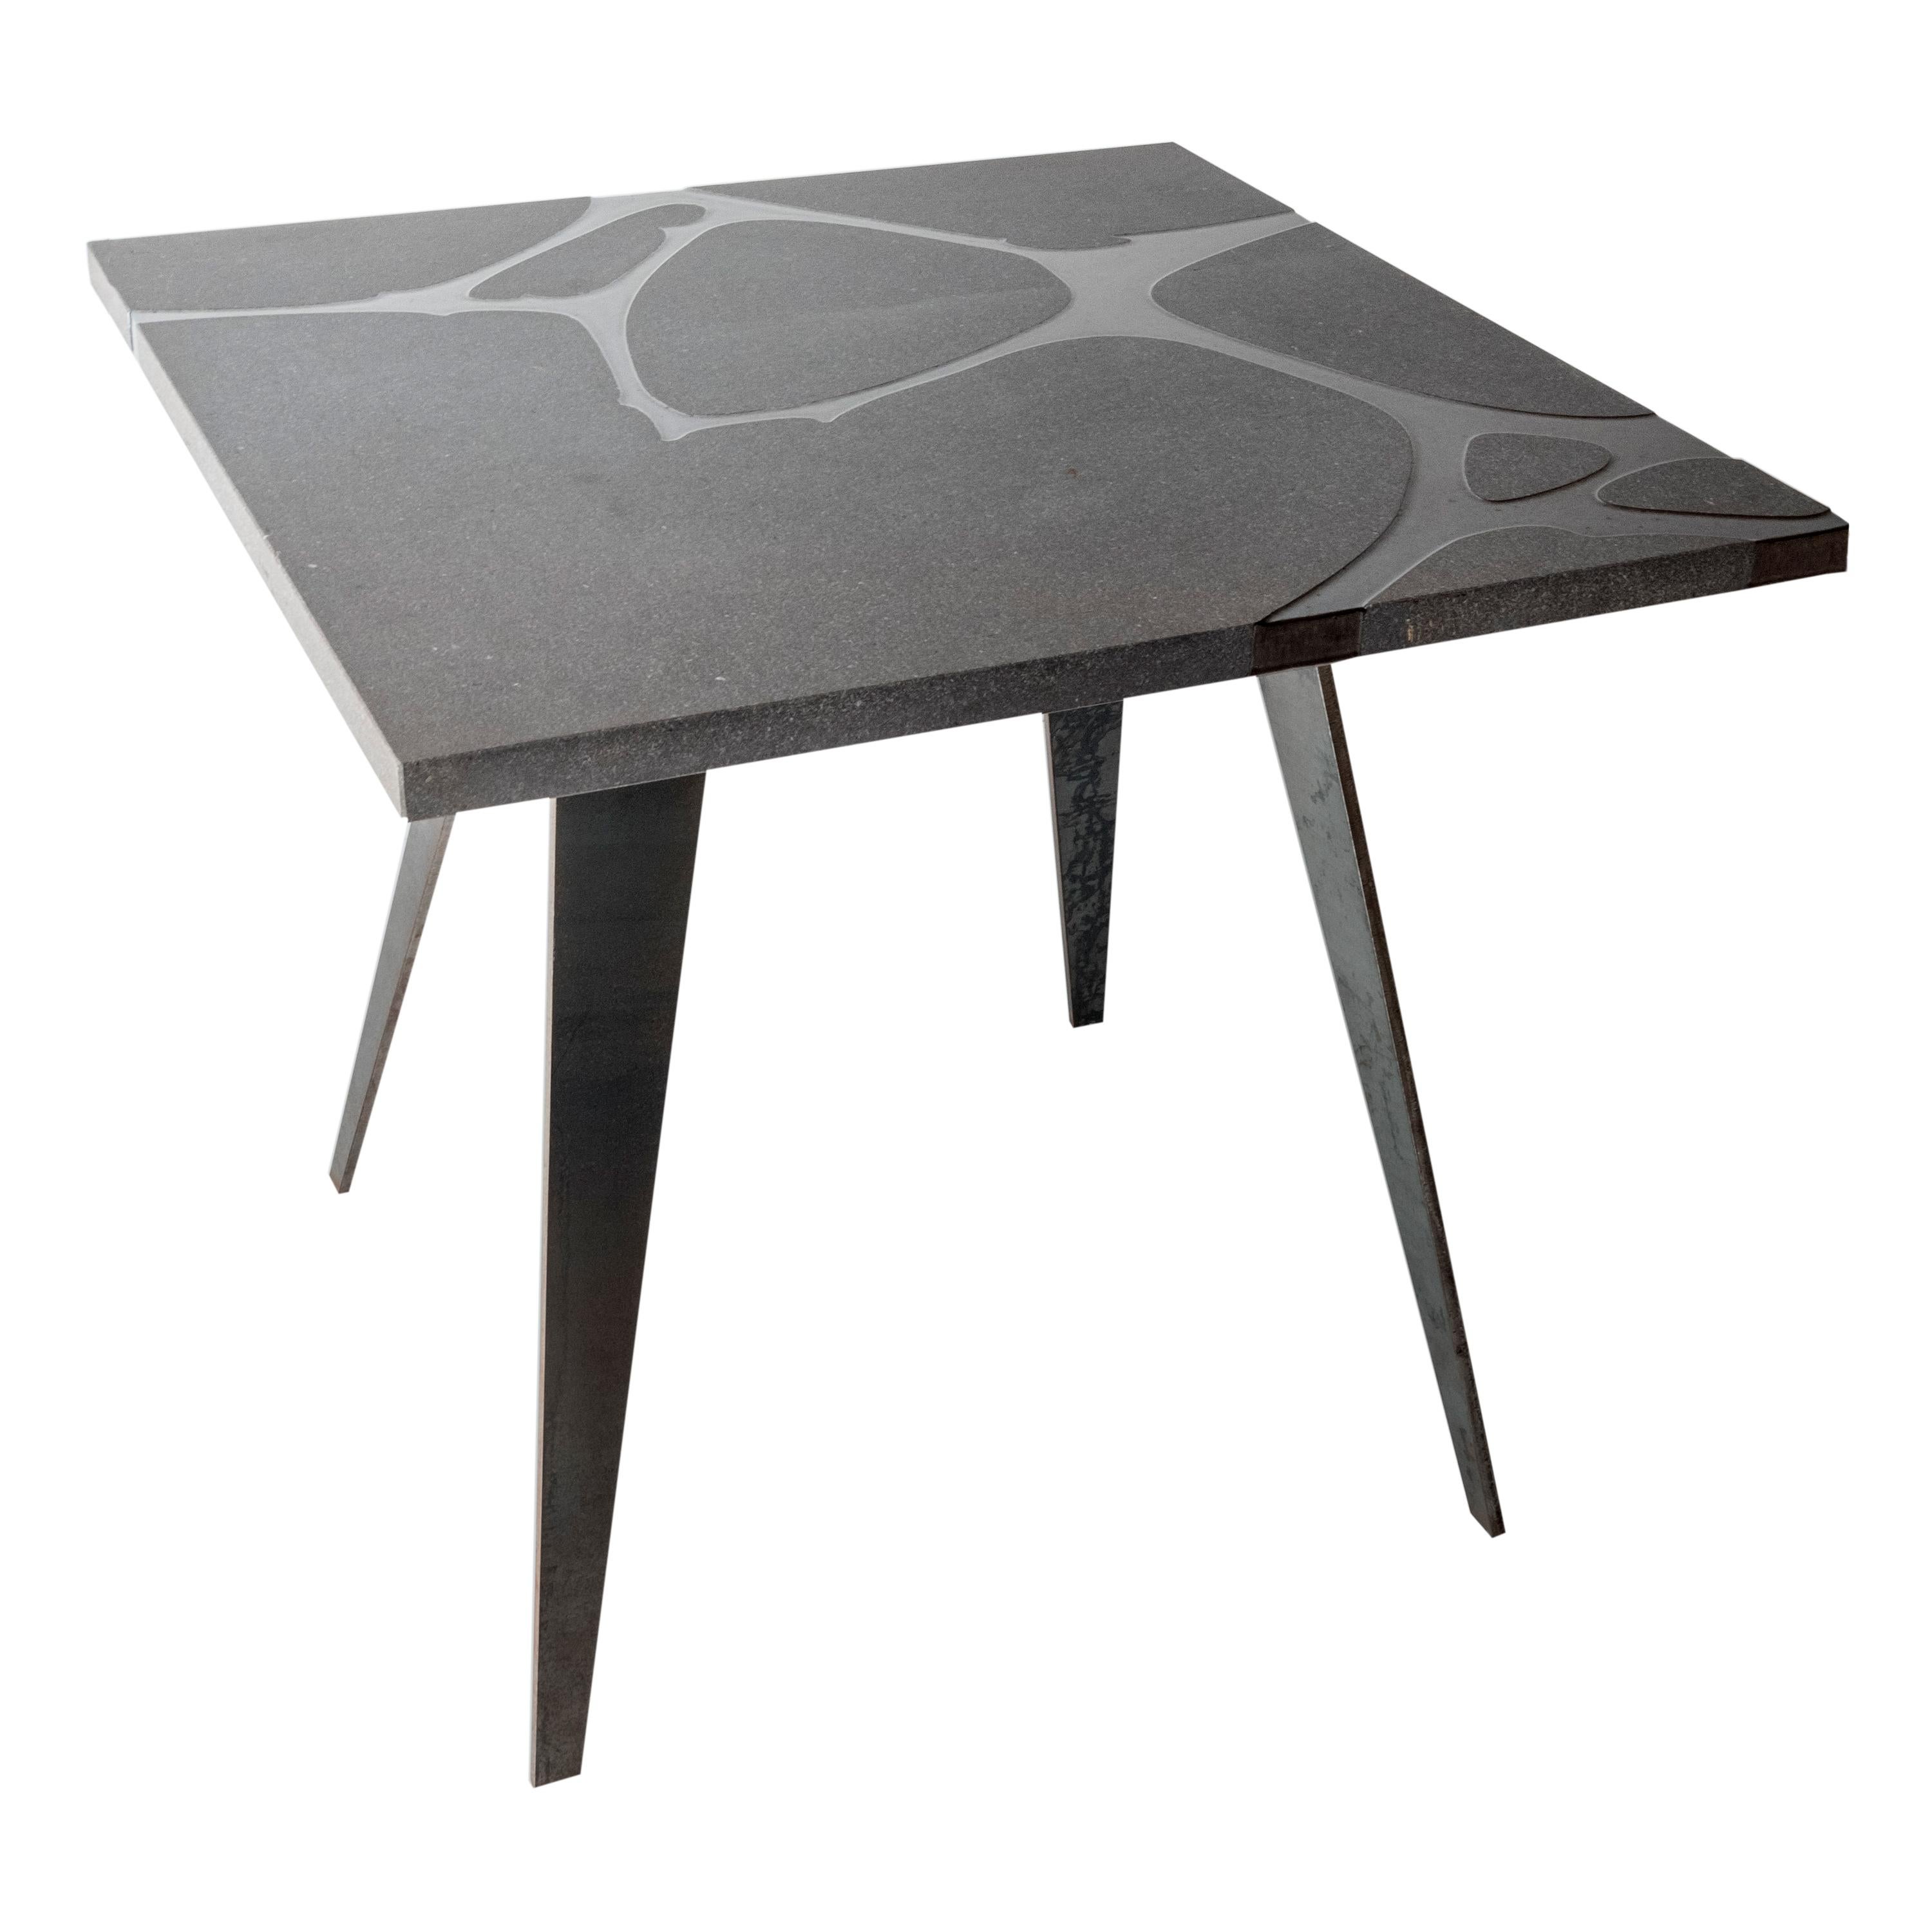 Modern Outdoor Square Table in Lava Stone and Steel, Venturae v1, Filodifumo For Sale